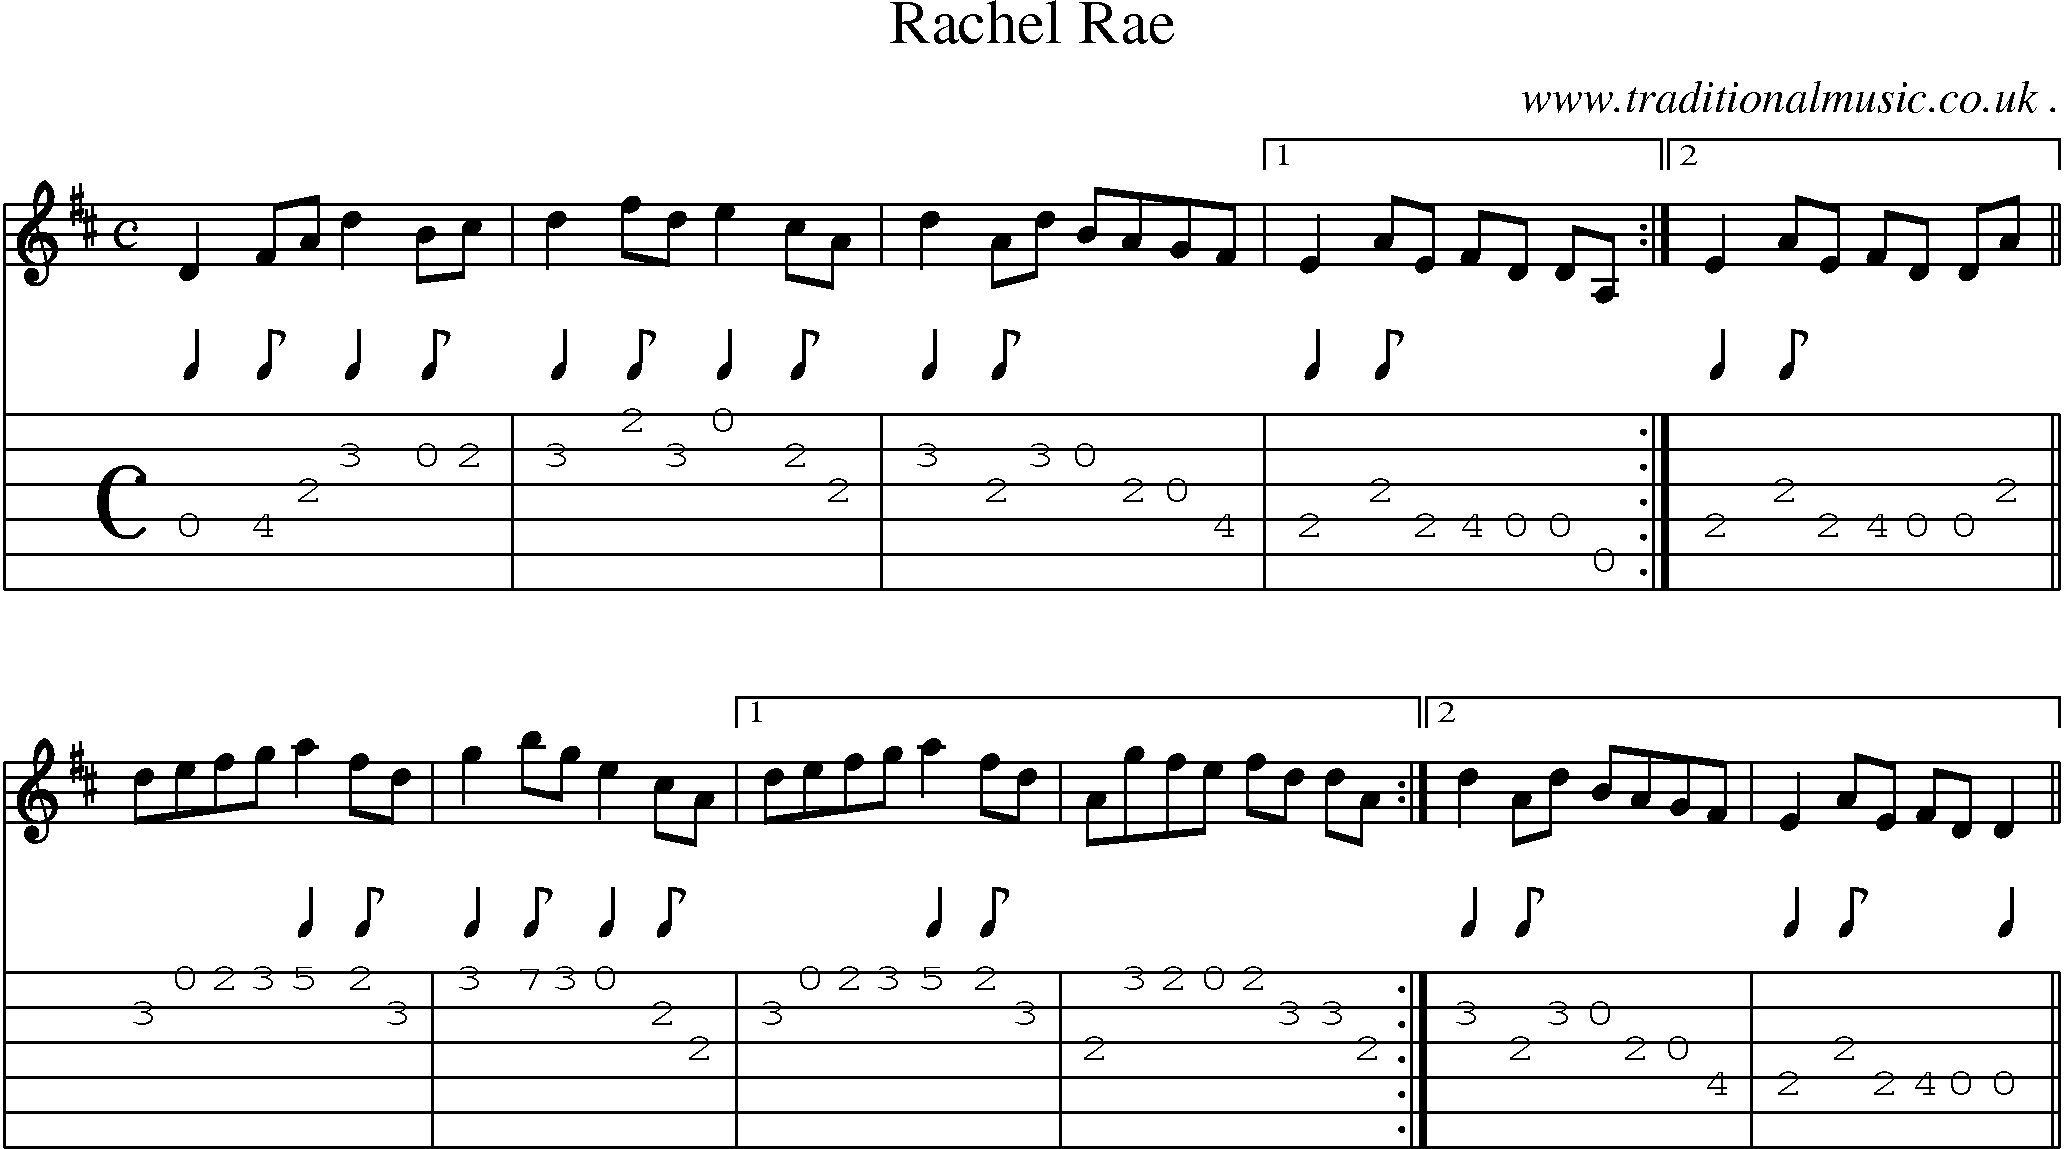 Sheet-Music and Guitar Tabs for Rachel Rae